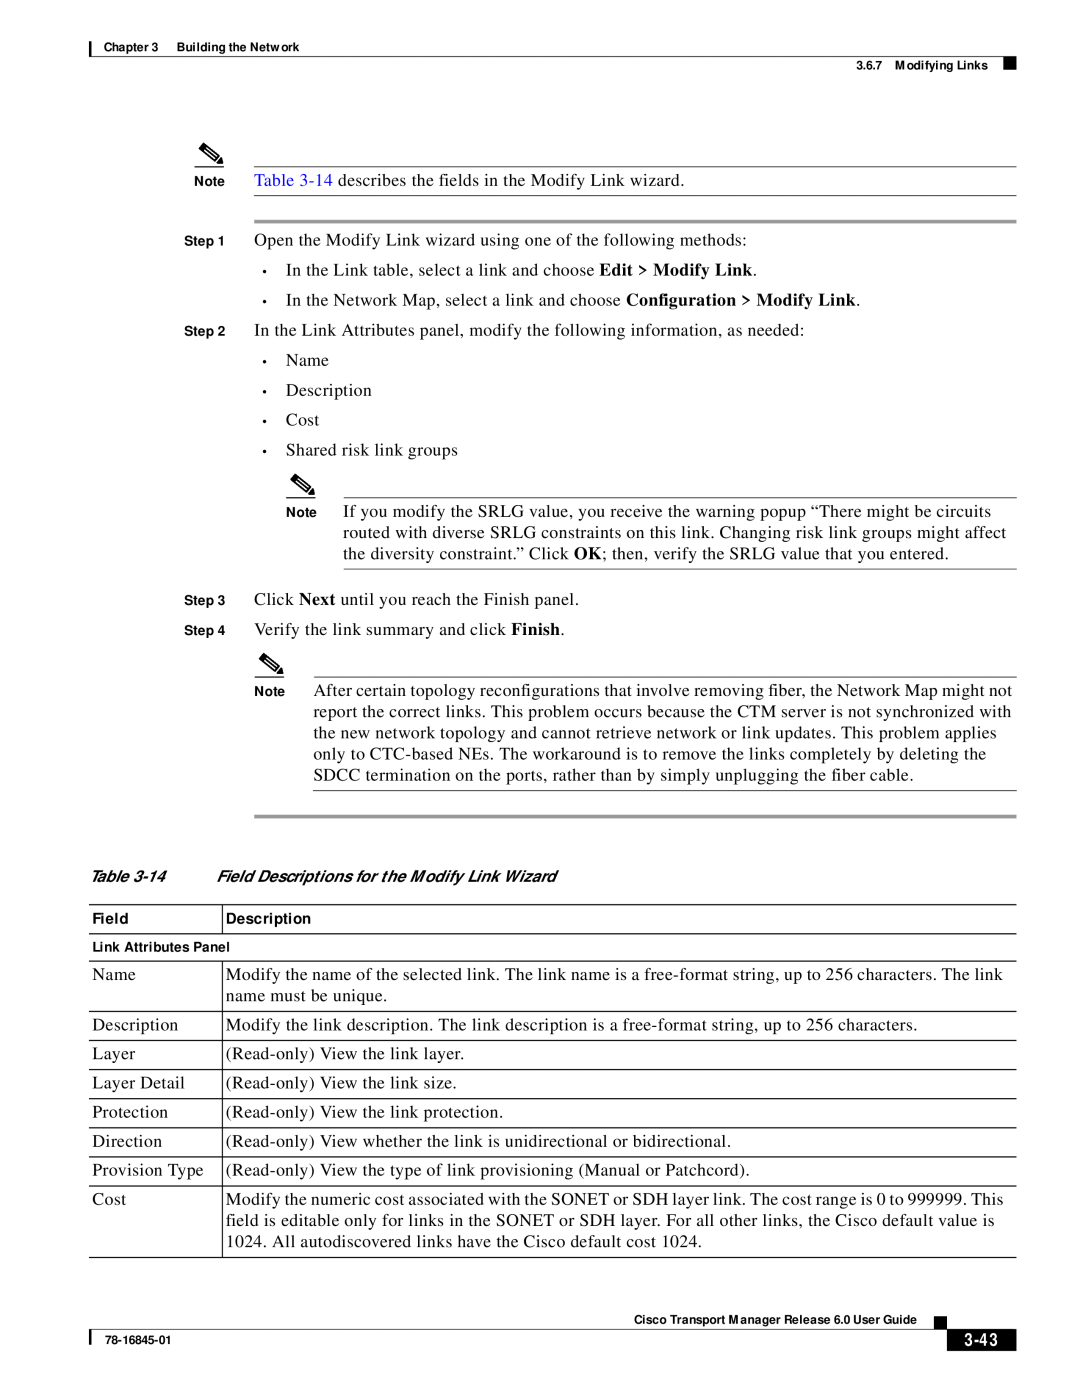 Cisco Systems 78-16845-01 manual 3-43, 14 Field Descriptions for the Modify Link Wizard 